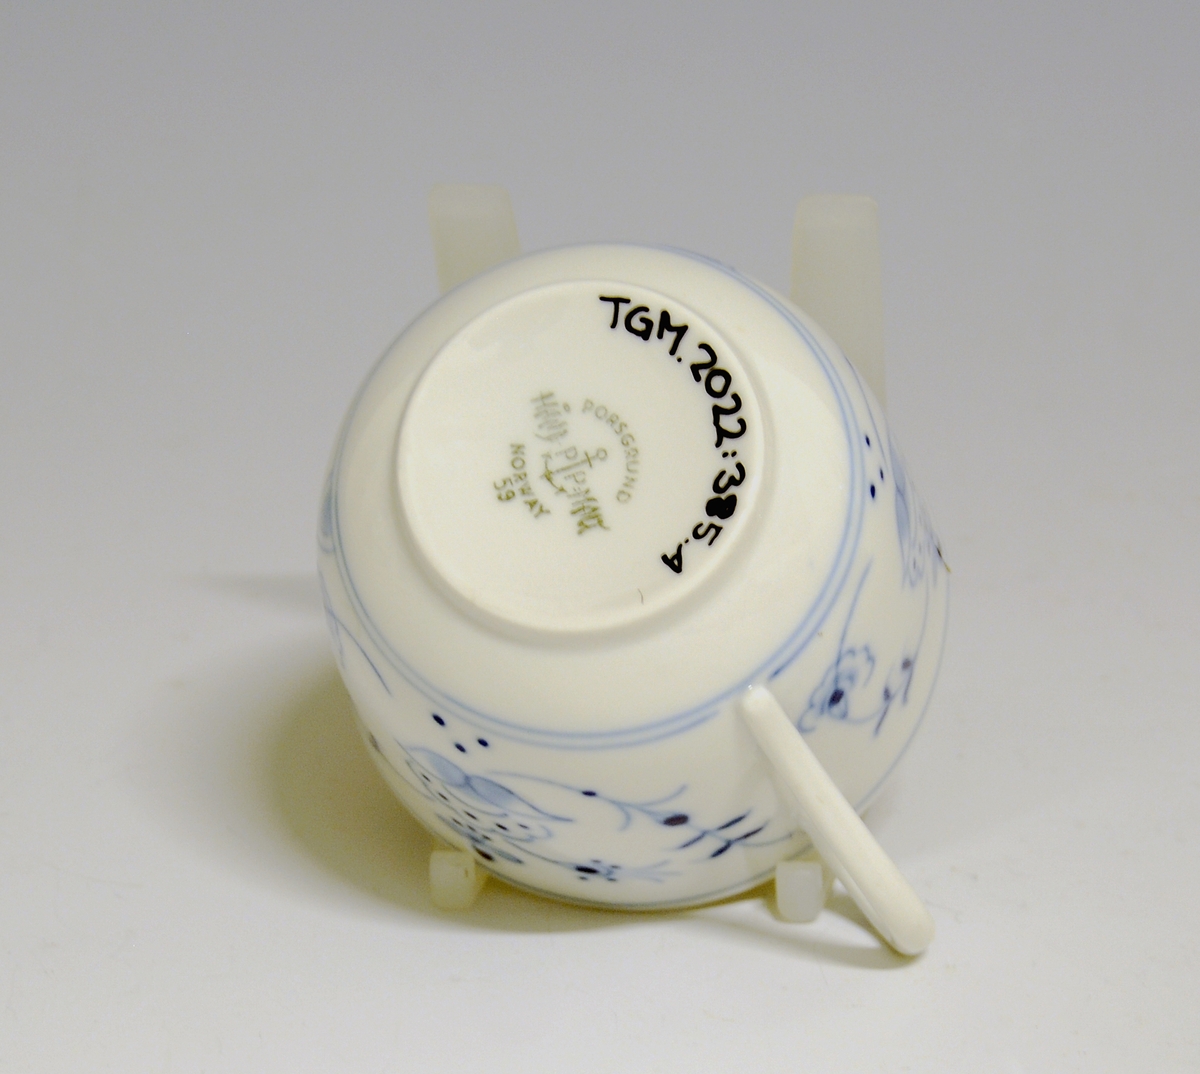 Kaffeskål i porselen. Dekorert med håndmalt stråmønster i blått. 

Dekor: "Porsgrunnsmønsteret", variant av stråmønster, antagelig av Hans Flygenring.